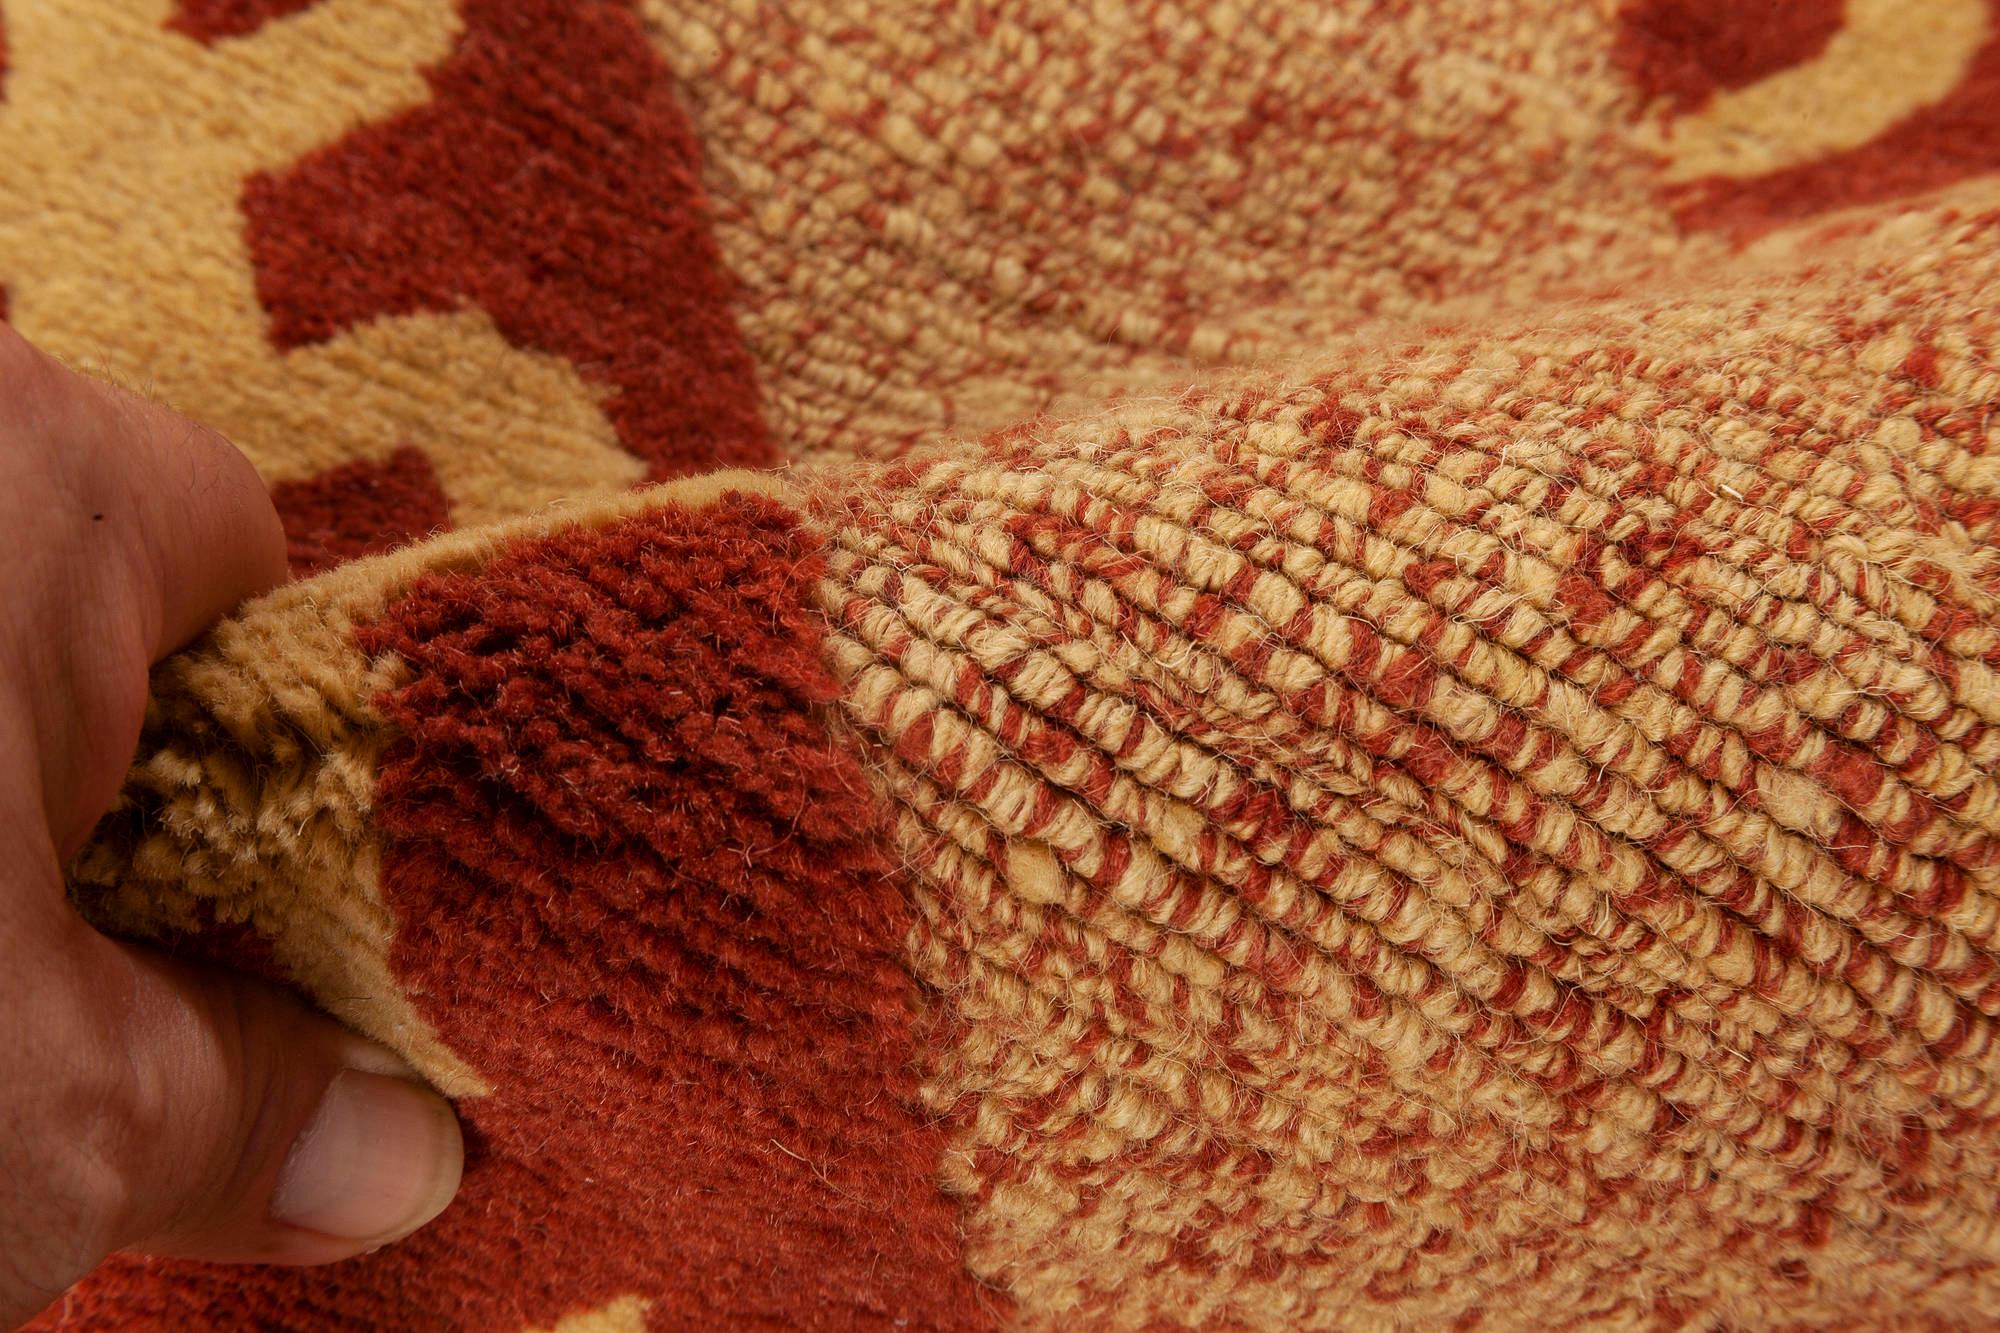 Modern Tribal Geometric design silk and wool rug by Doris Leslie Blau
Size: 13'0